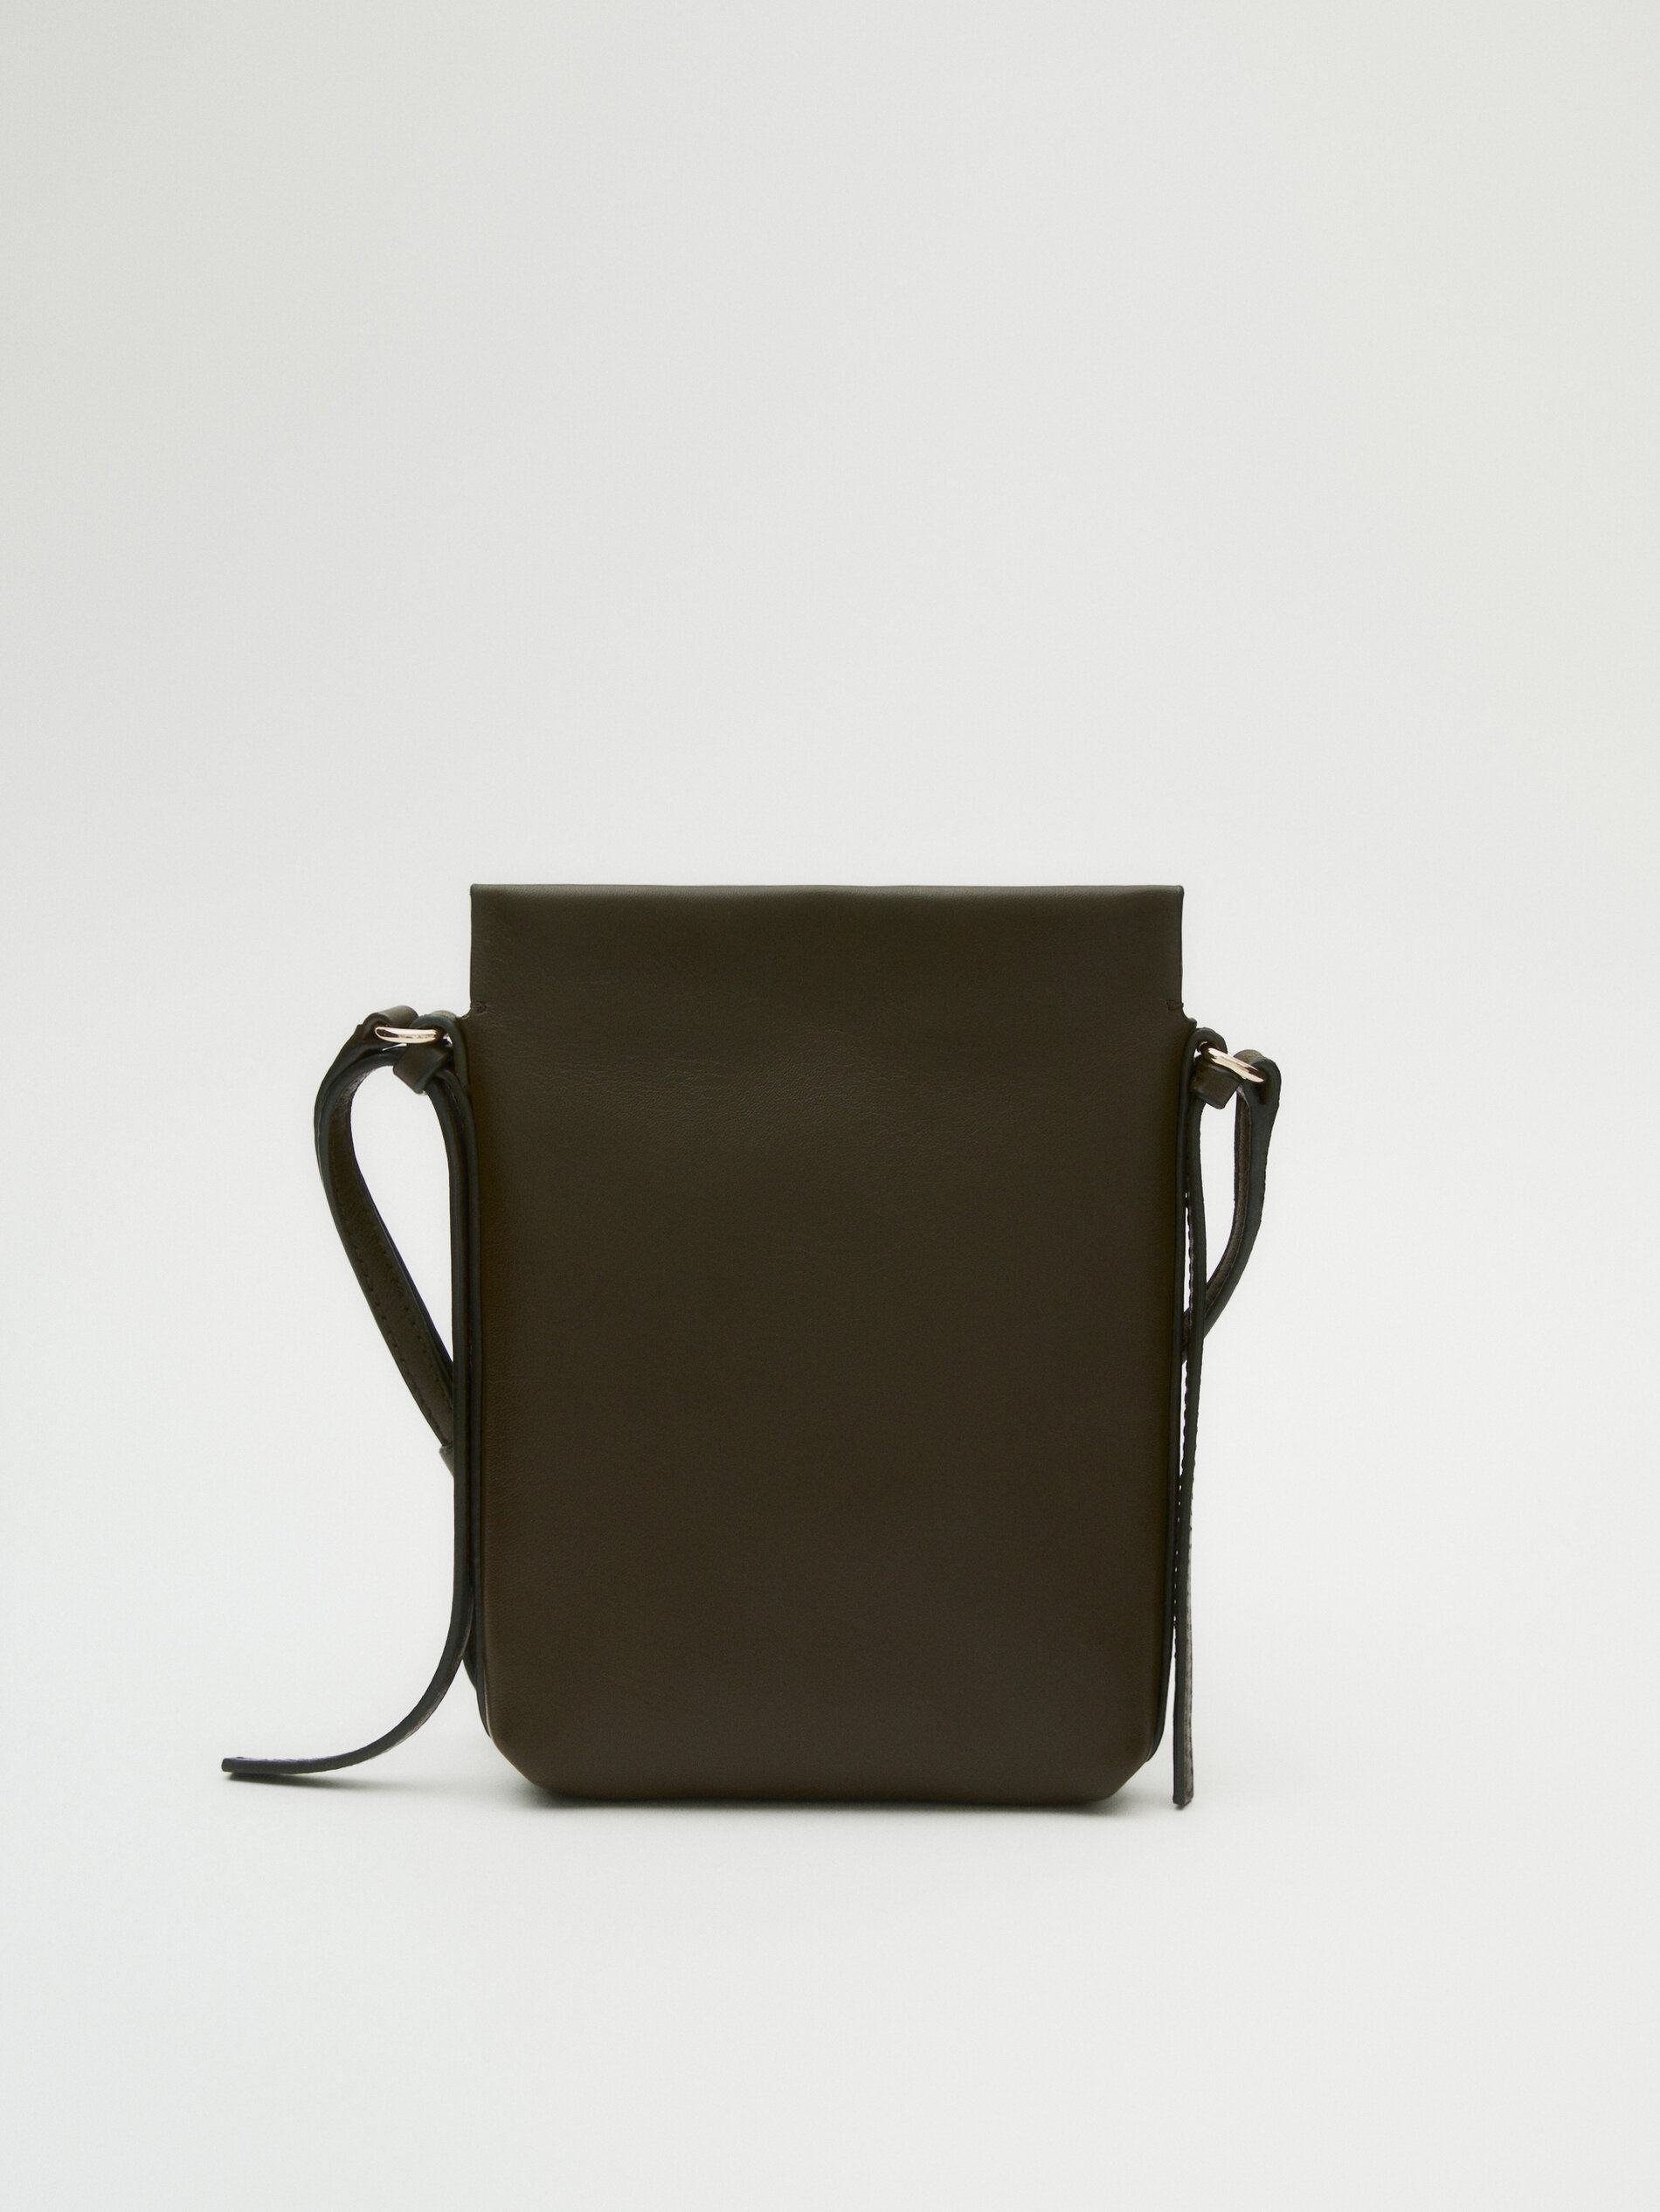 Ranger Buffalo Leather Messenger Bag Crossbody Laptop Bag (Mulberry) –  Rustic Town India